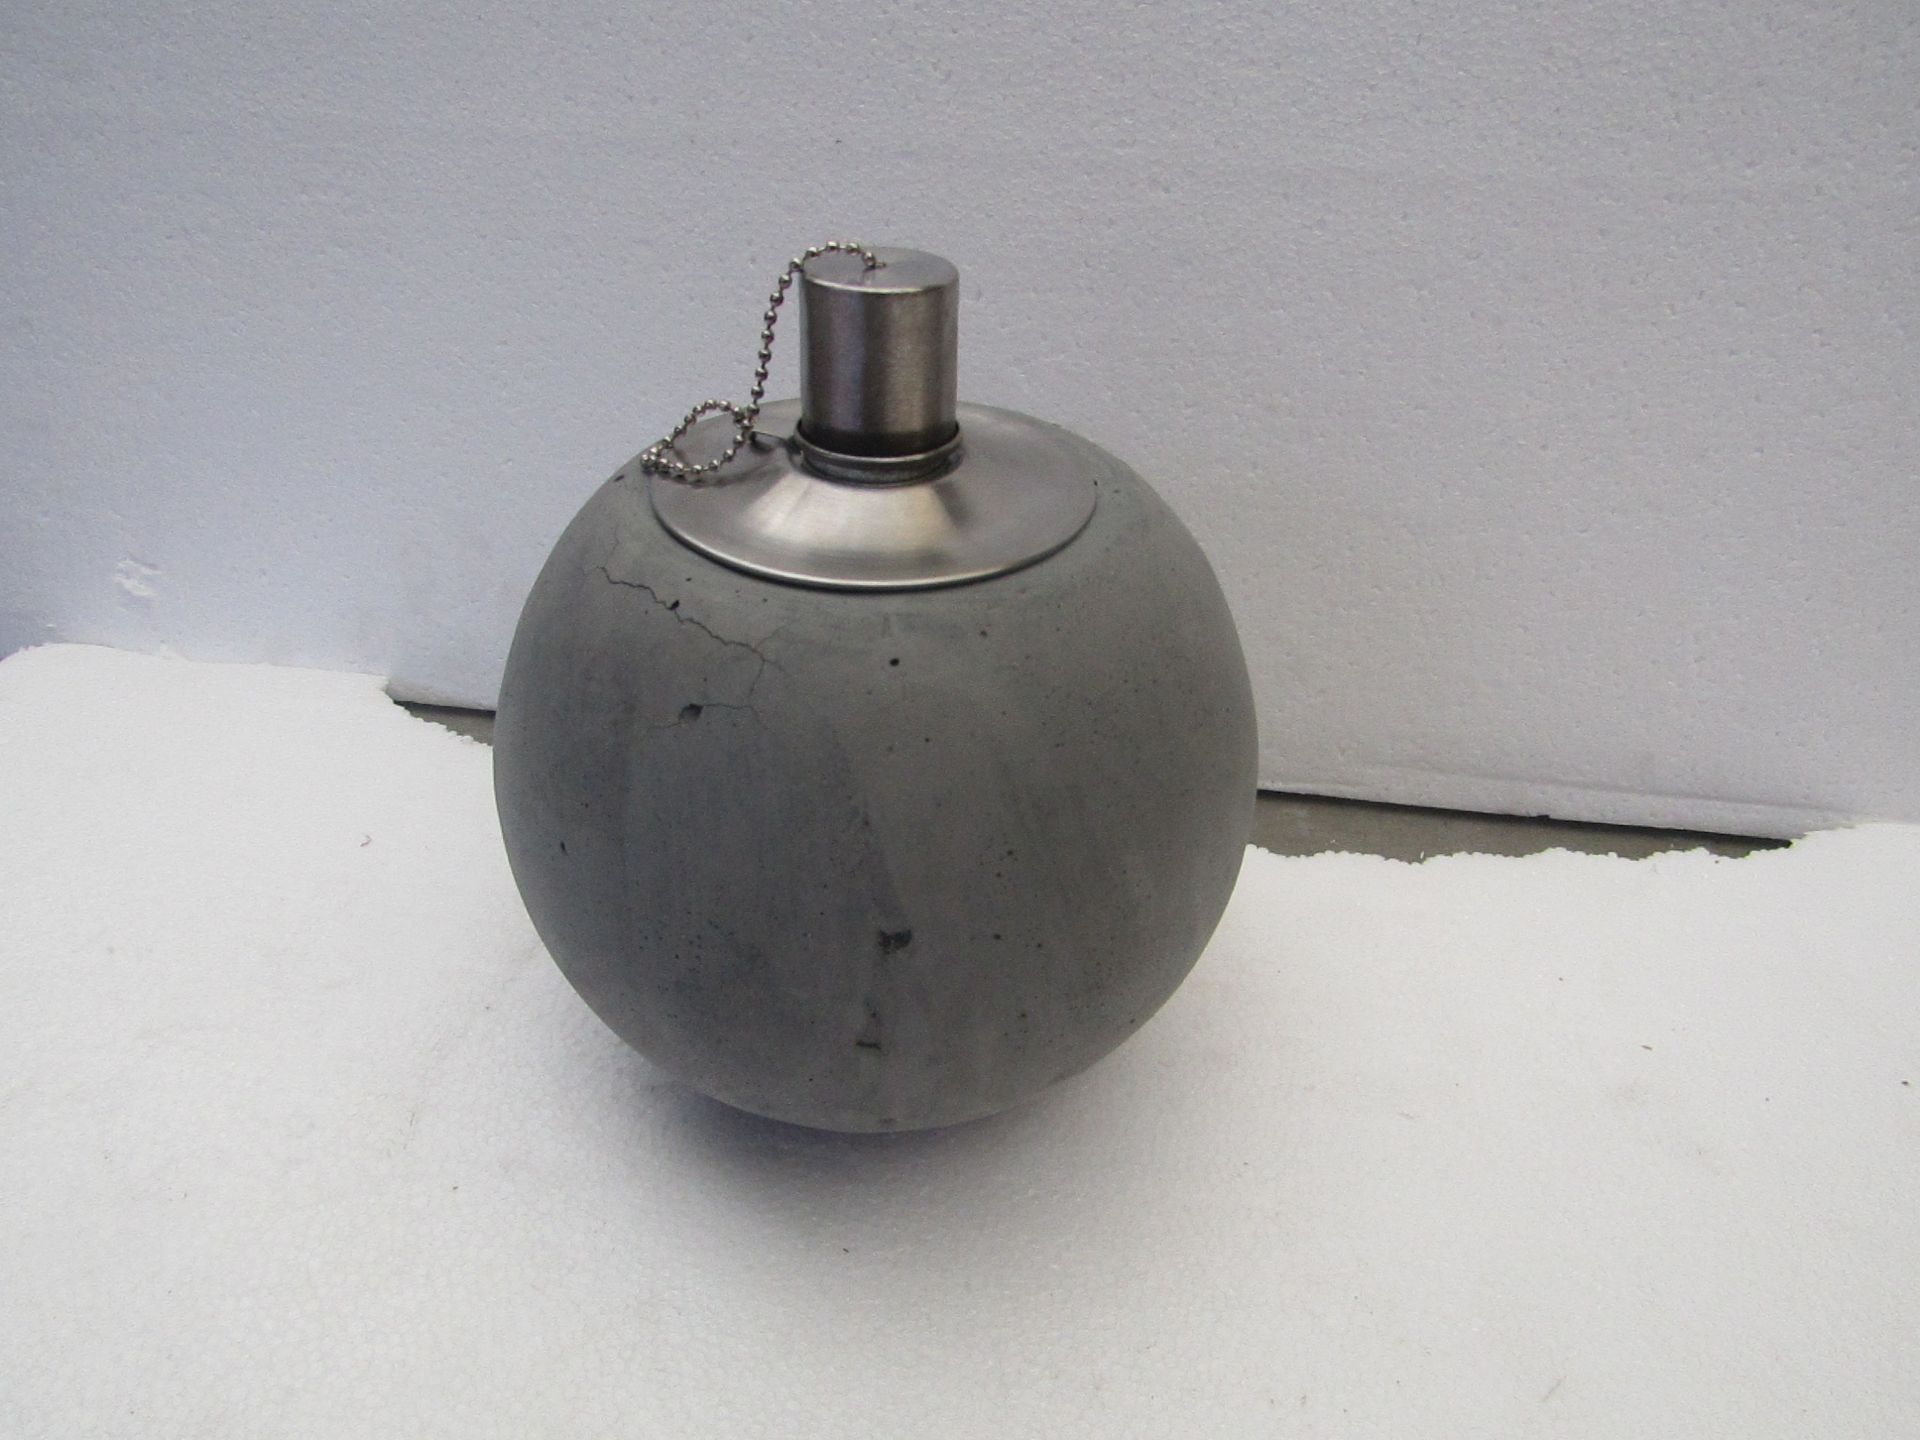 Grey Concrete Citronella Oil Garden Table Lamp - Unchecked & Boxed - £24.99. - Image 2 of 2